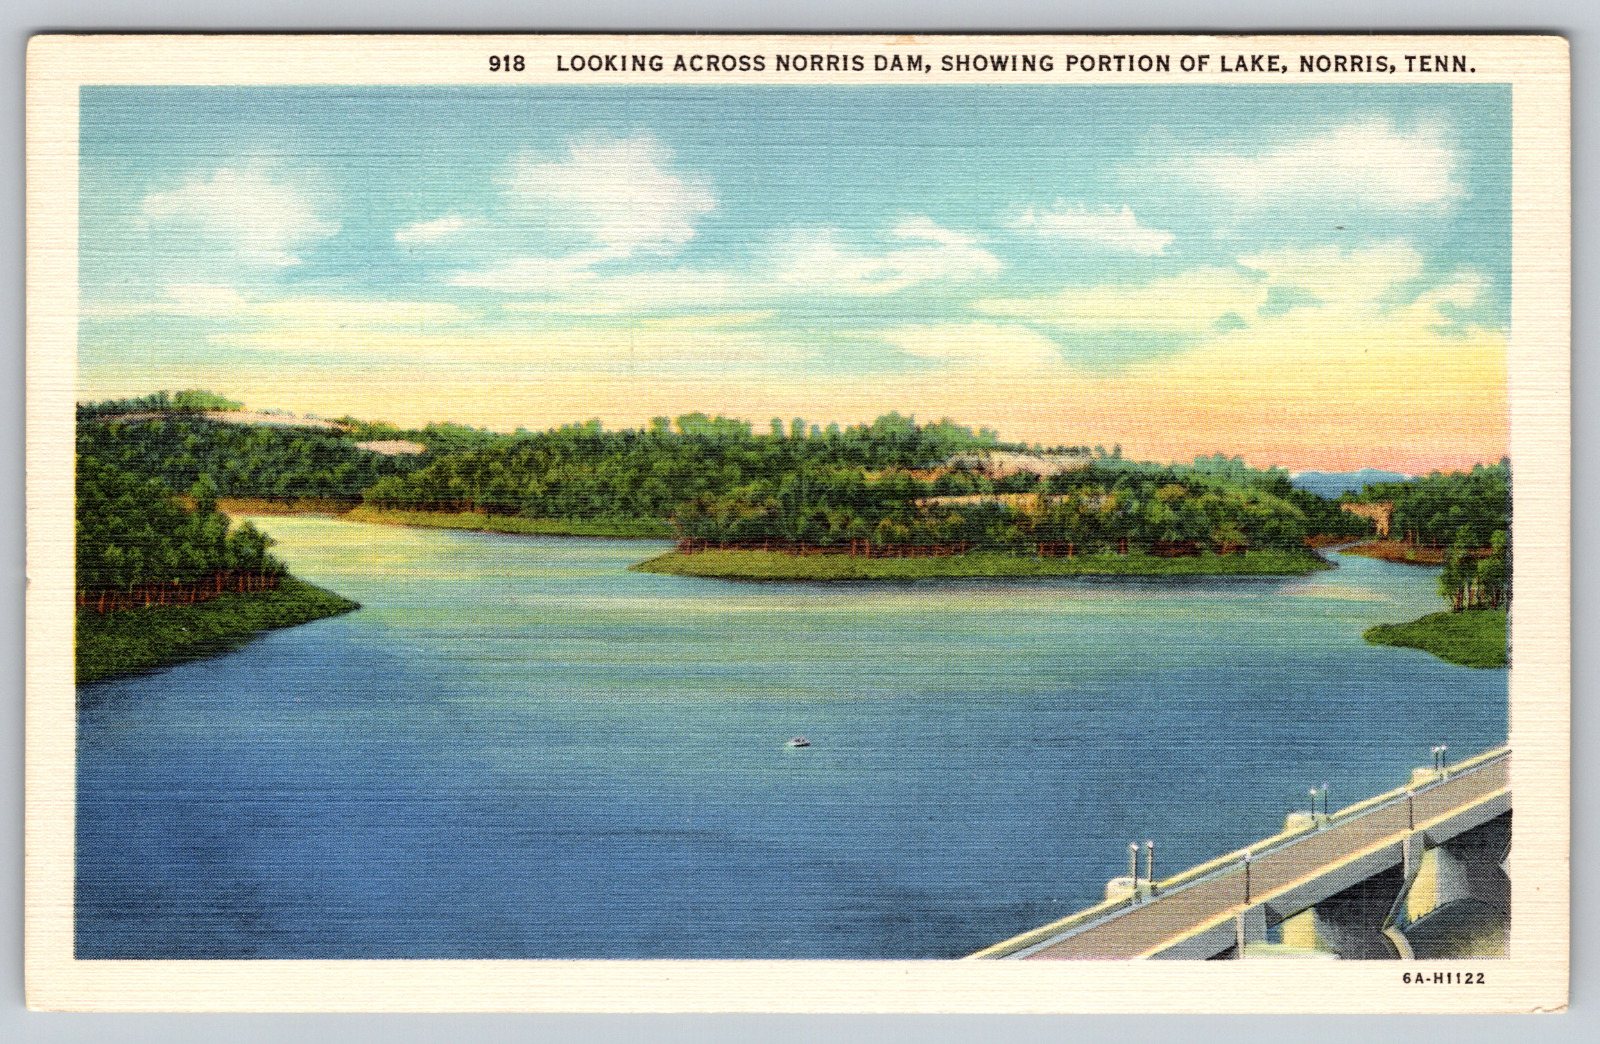 c1940s Norris Dam Lake Tennessee View Vintage Postcard